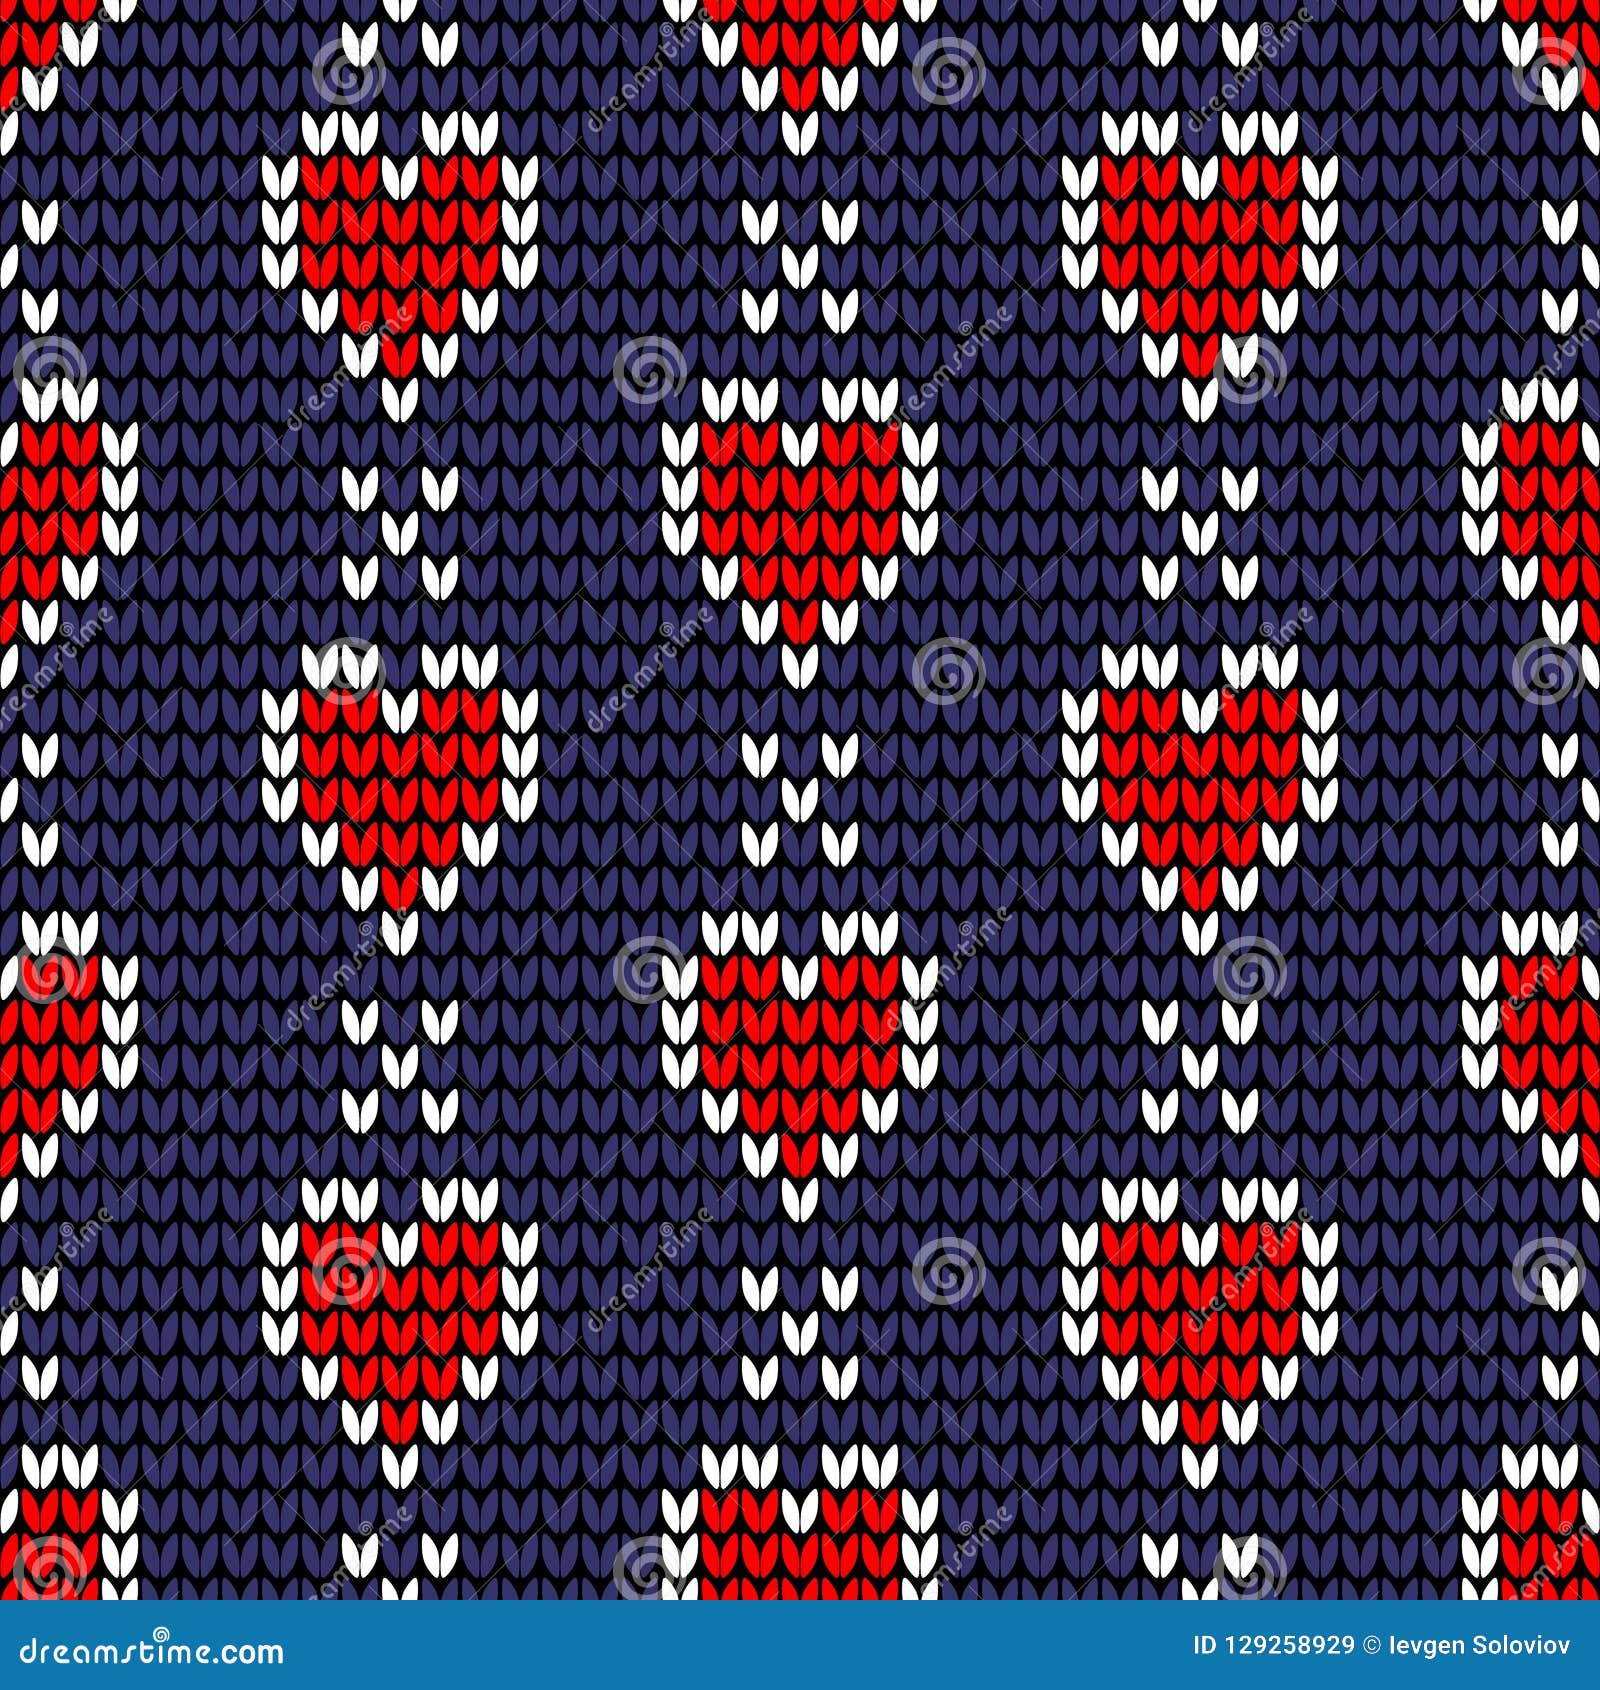 Seamless Love Knitting Pattern Stock Vector Illustration